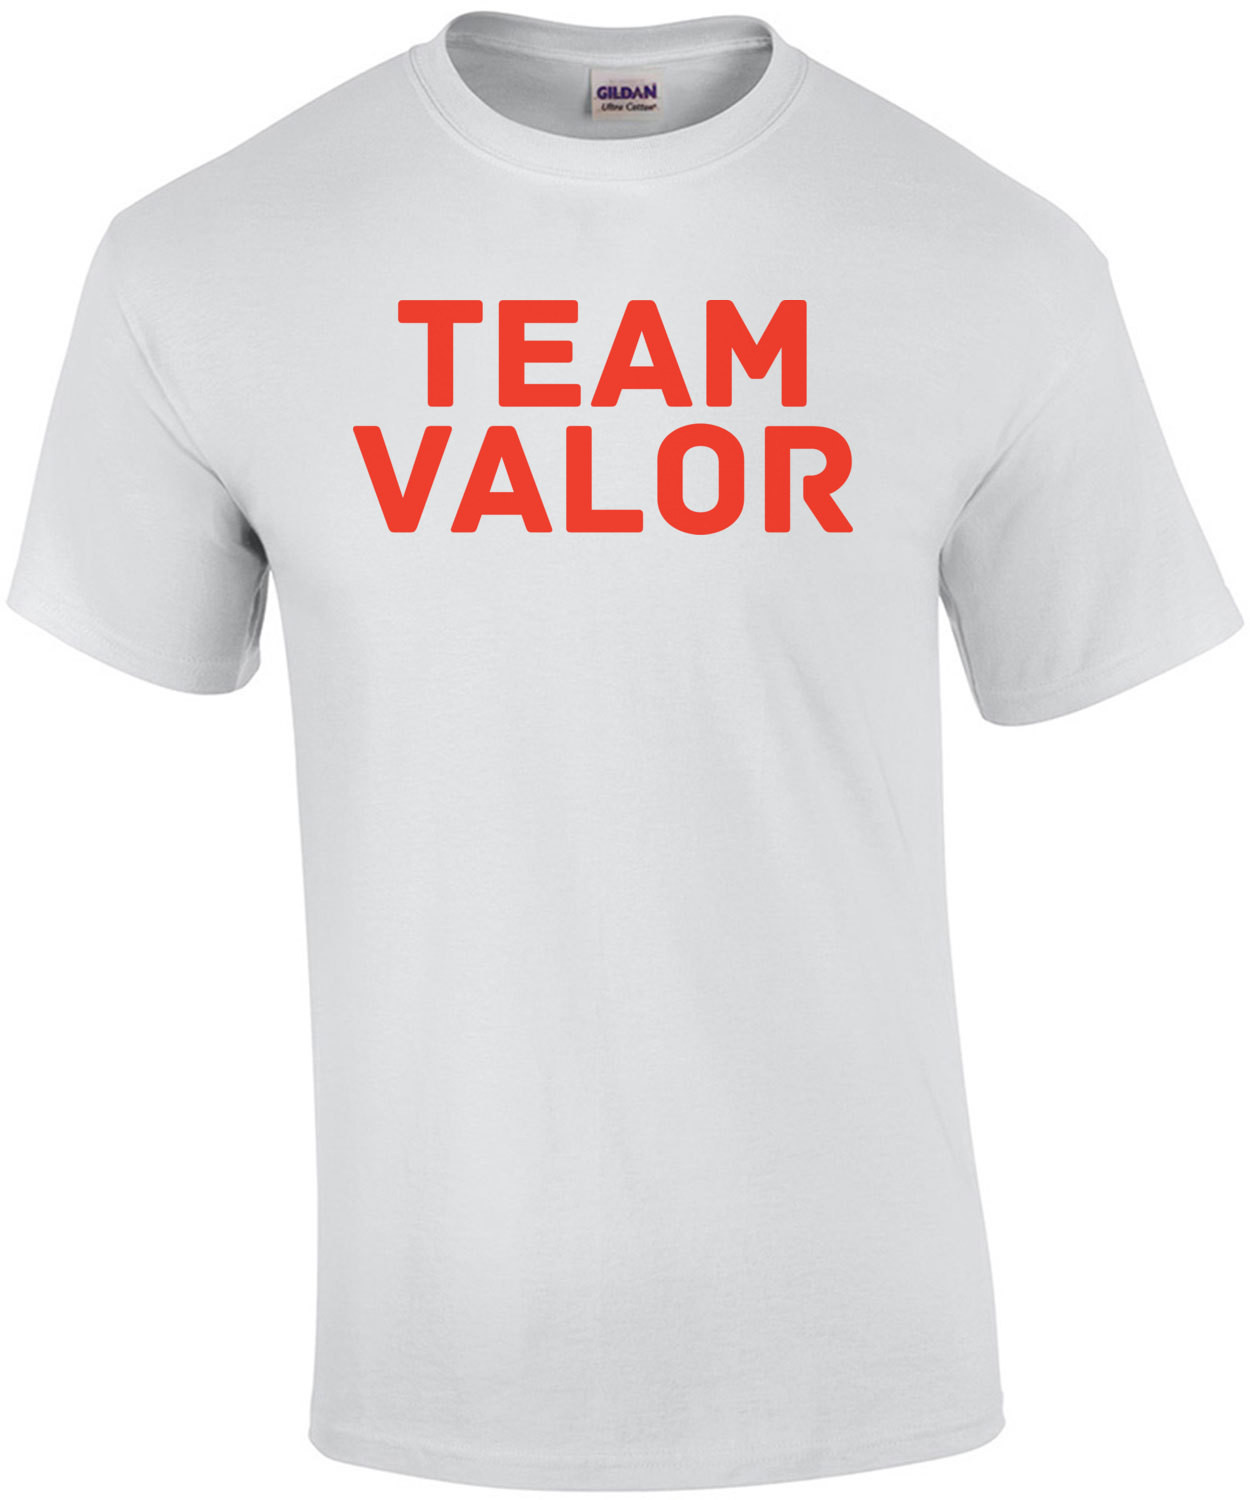 Pokemon Go Team Valor (Text Only)